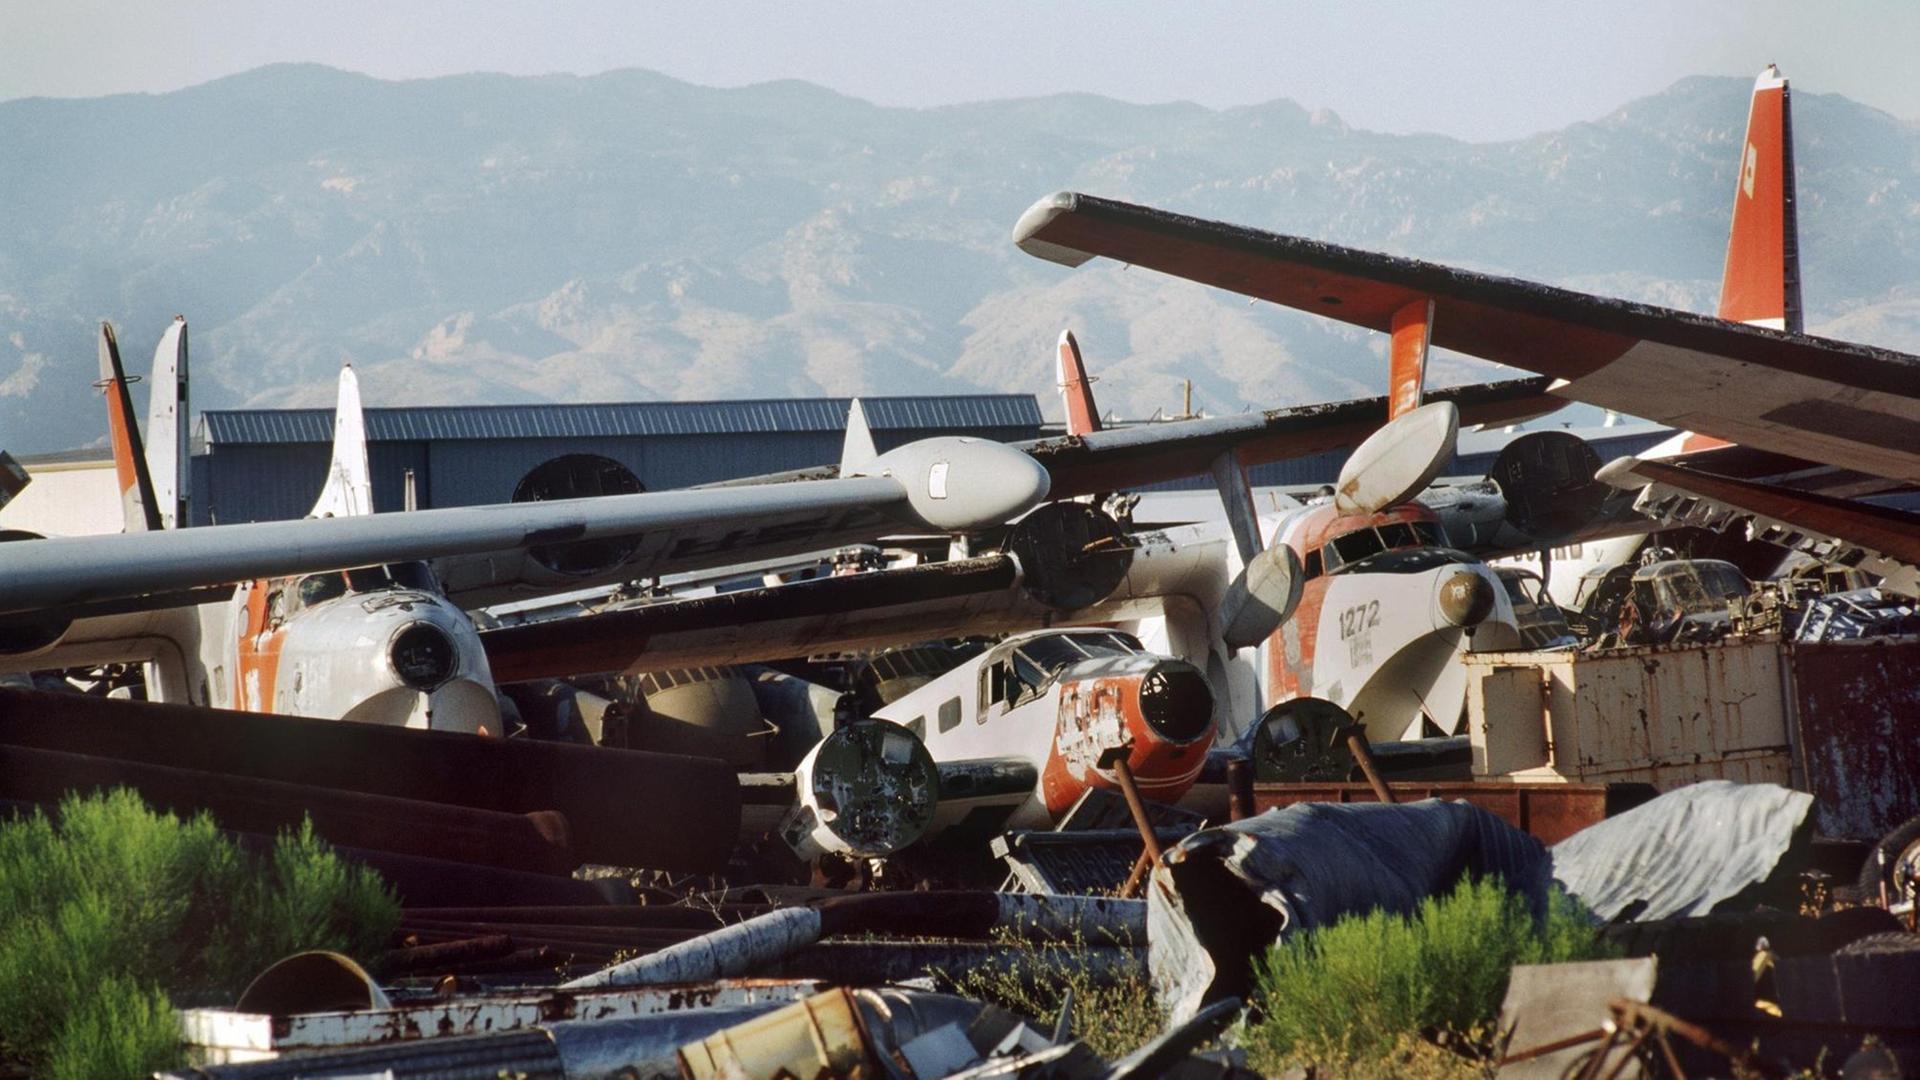 Flugzeugfriedhof in Arizona